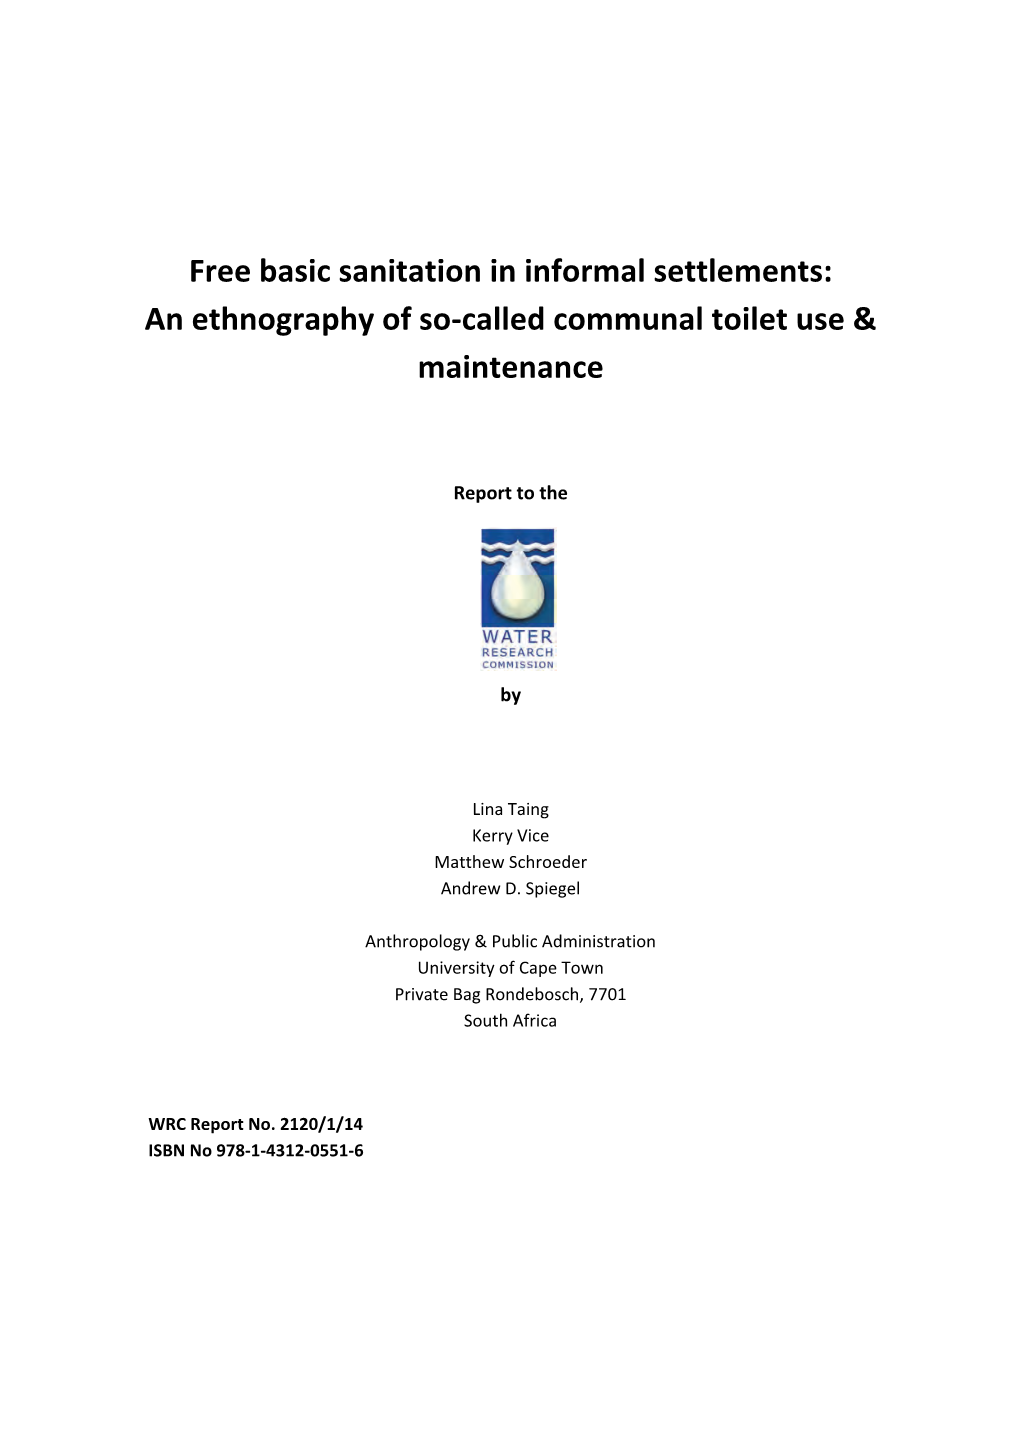 Free Basic Sanitation in Informal Settlements: an Ethnography of So-Called Communal Toilet Use & Maintenance